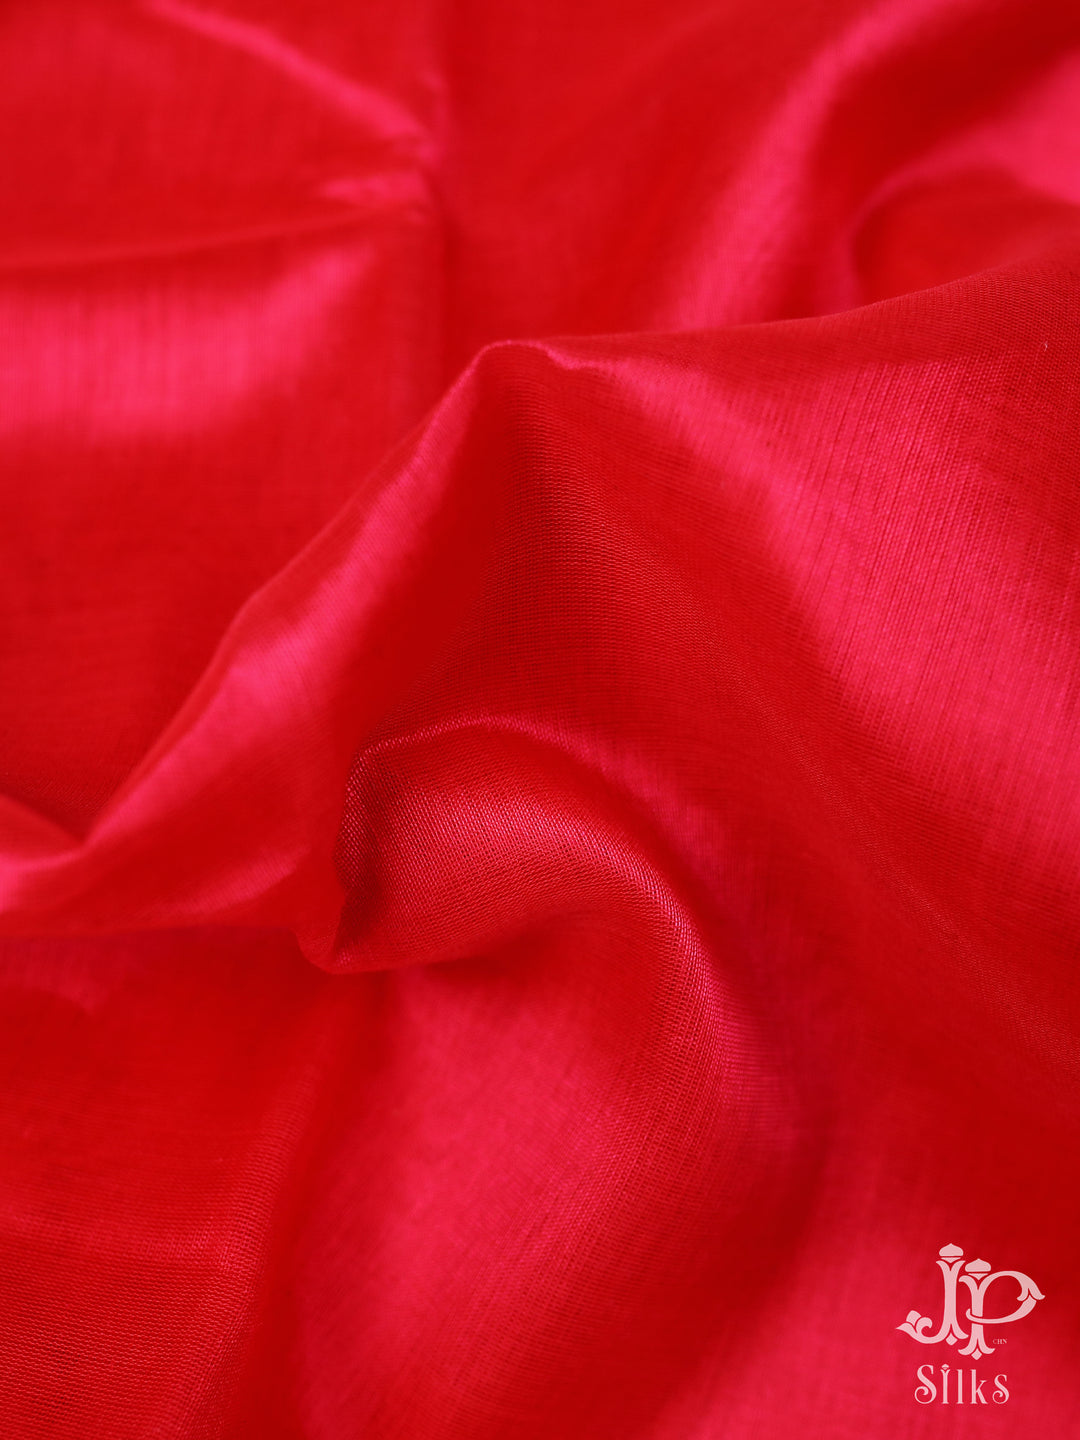 Hot Pink and Brown Silk Cotton Saree - D8236 - View 1